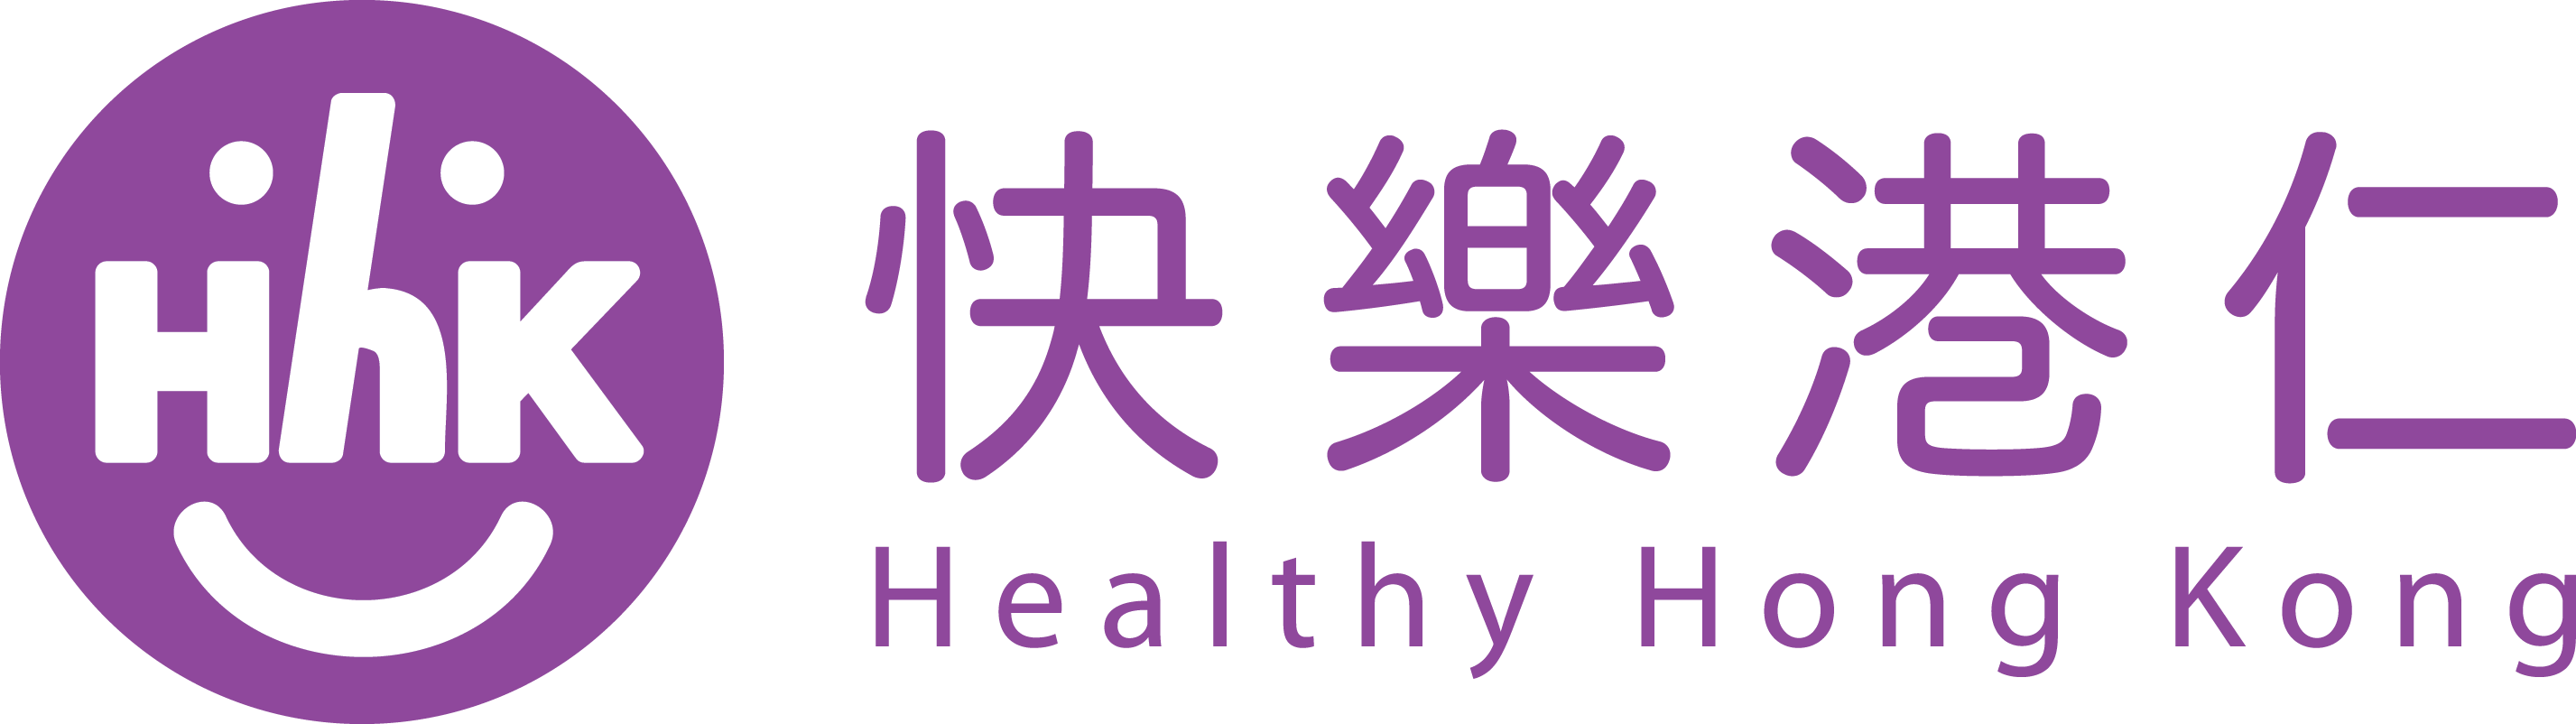 HealthyHK-Logo_快樂港仁會名旁